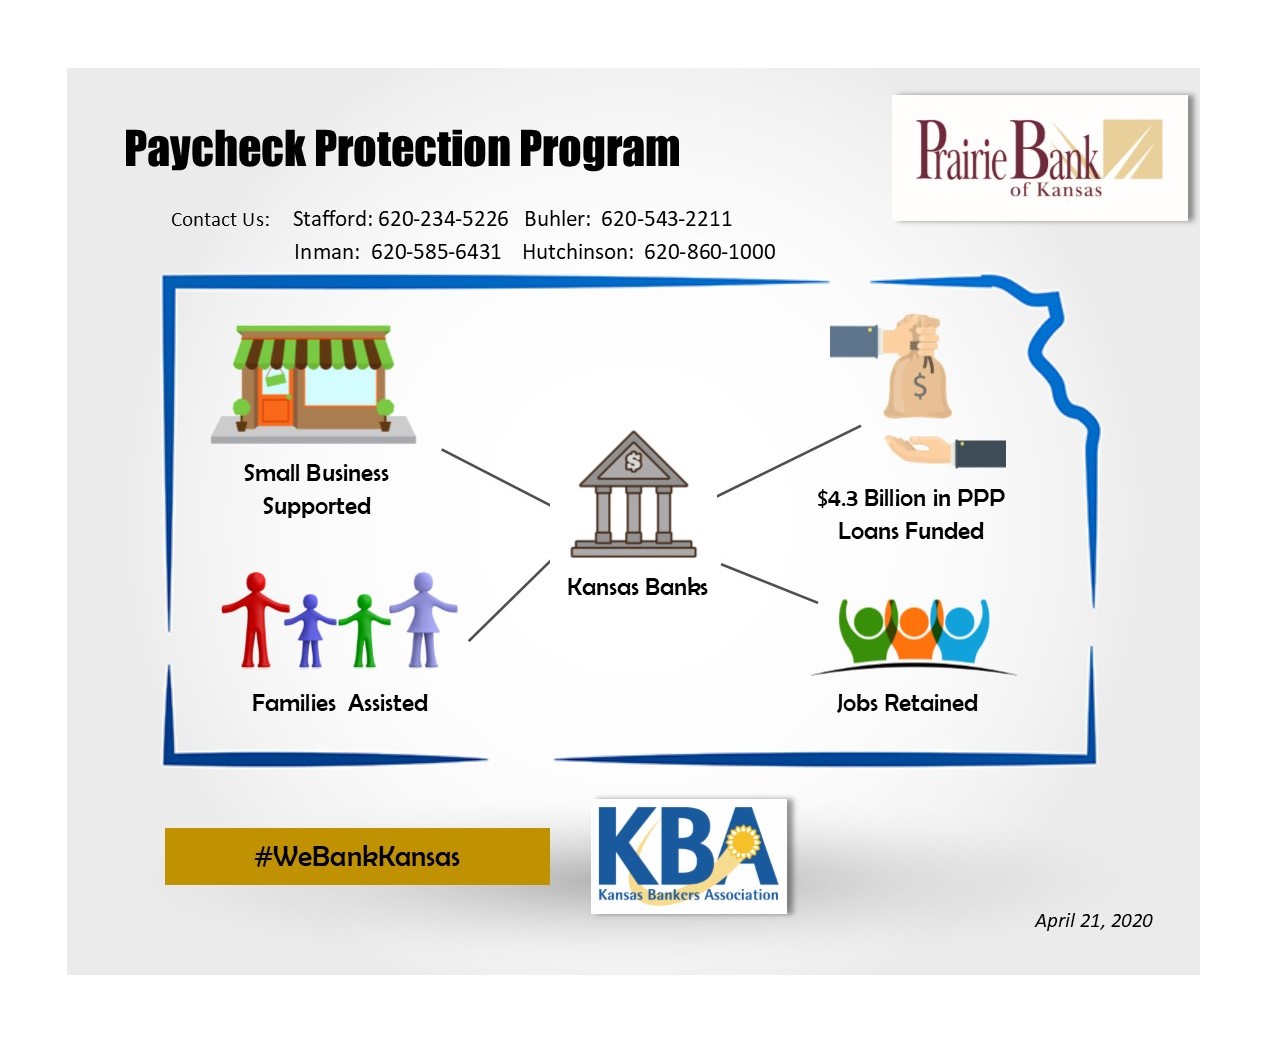 Paycheck Protection Program infographic. Contact Us: Stafford: 620-234-5226, Buhler: 620-543-2211, Inman: 620-585-6431, Hutchinson: 620-860-1000. #WeBankKansas Kansas Bankers Association.